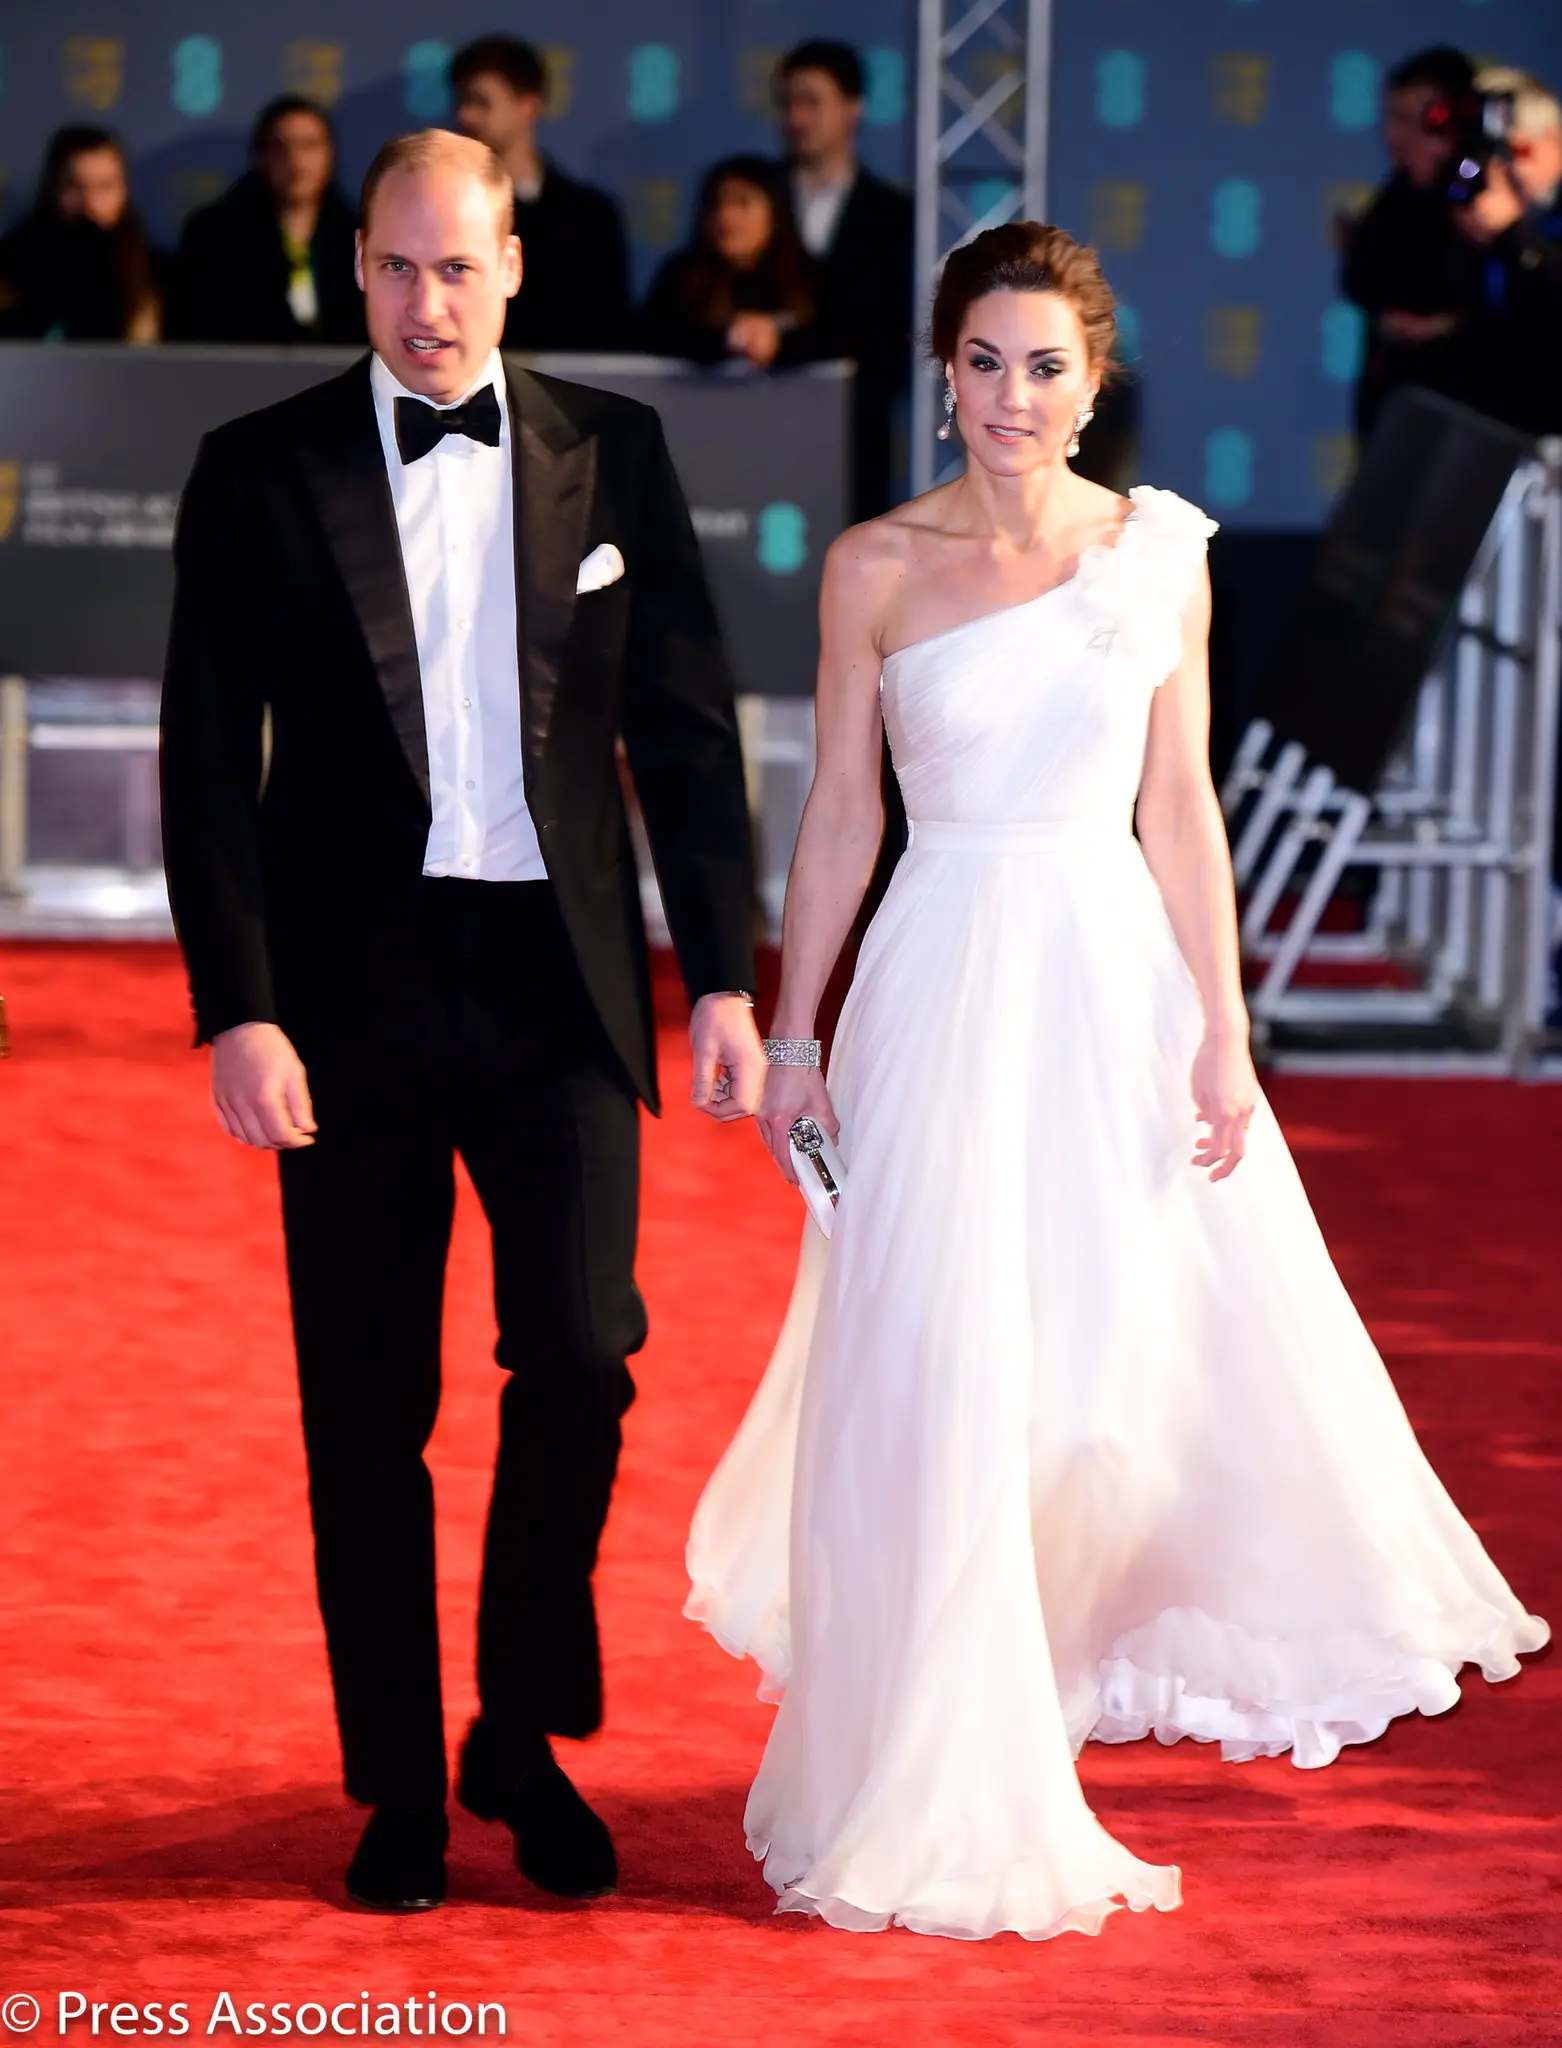 The Duke and Duchess of Cambridge at BAFTA 2019